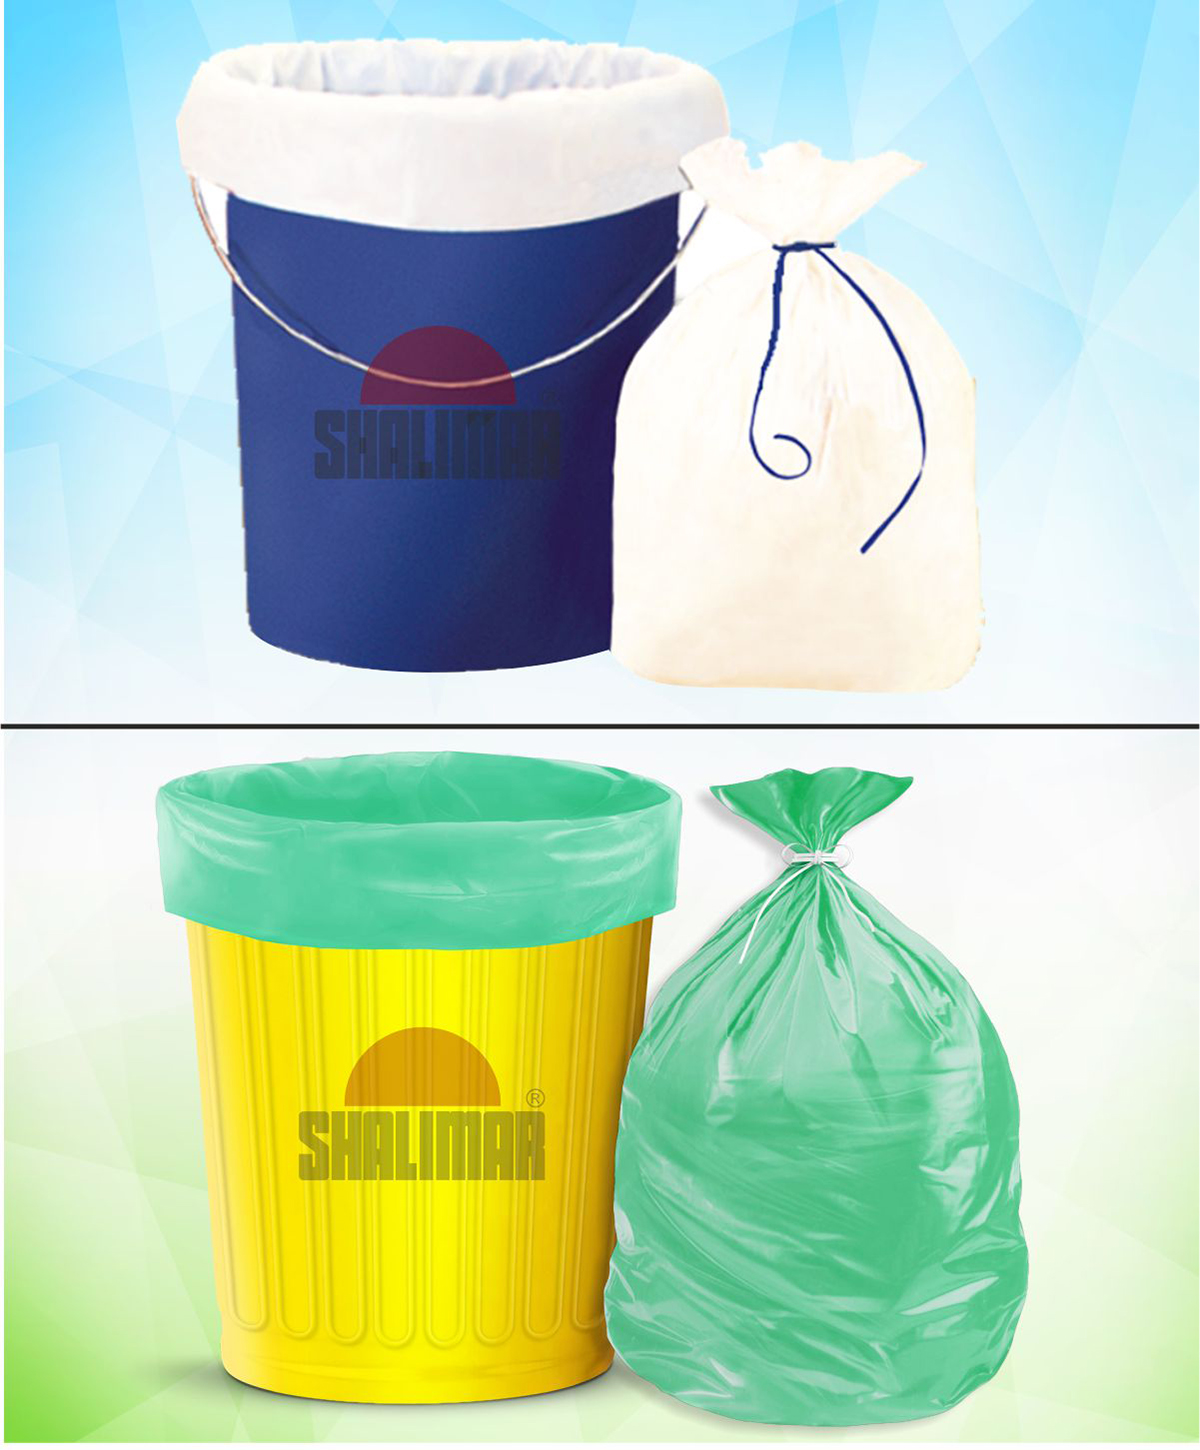 BIODEGRADABLE Trash bag Garbage bag Black (Small/Medium/Large/XL/XXL)